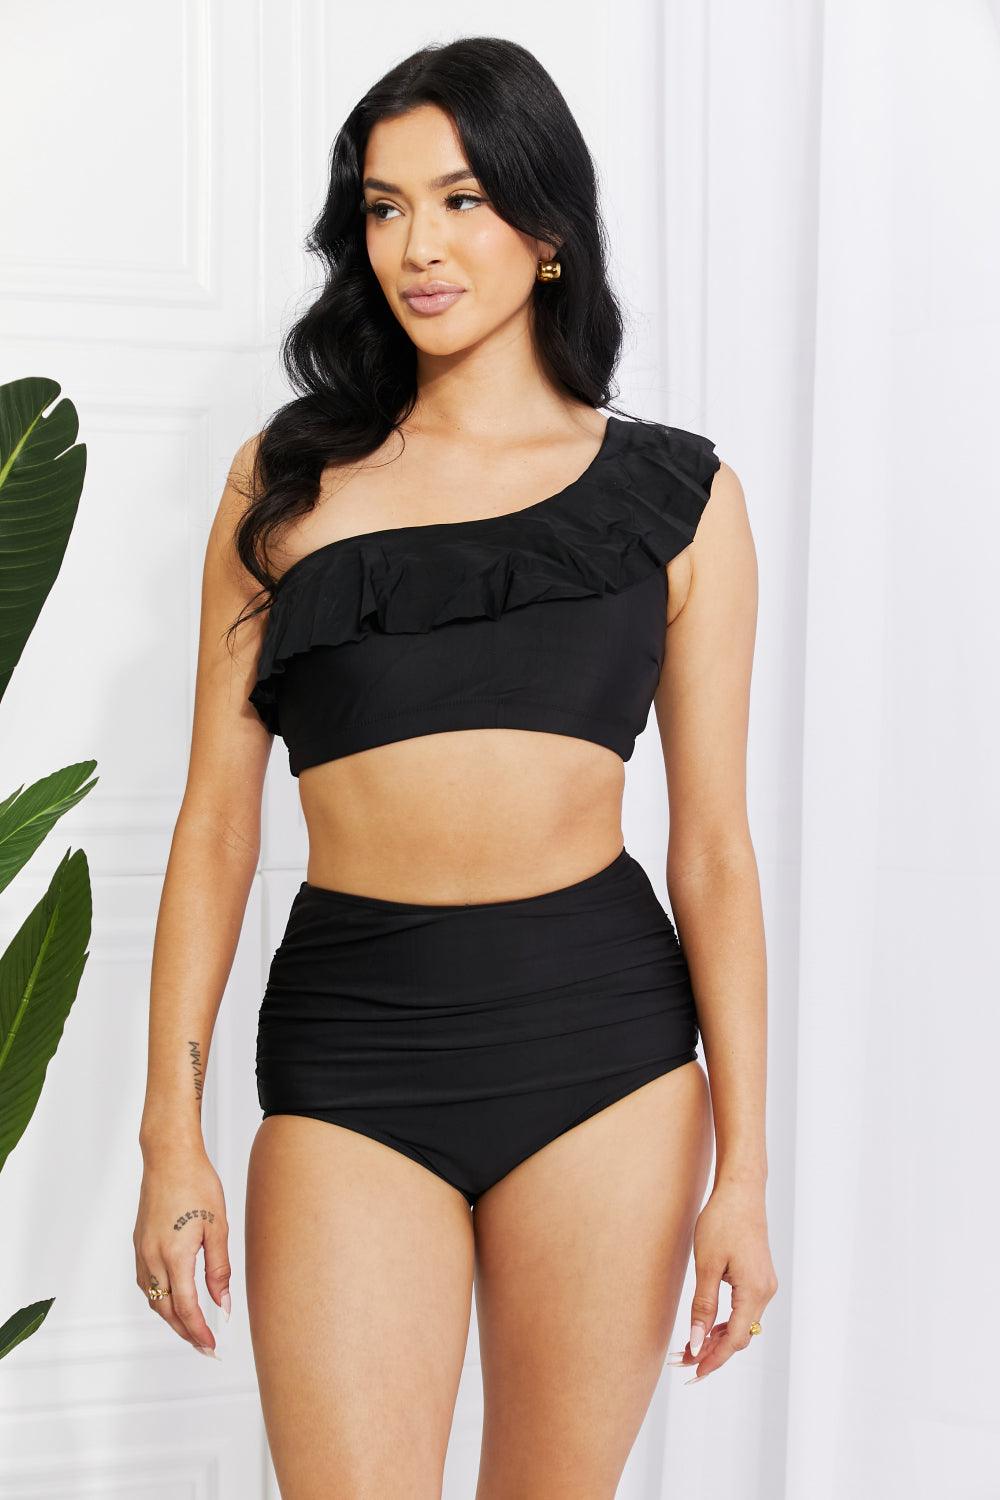 Marina West Swim Seaside Romance Ruffle One-Shoulder Bikini in Black - Laguna Looks